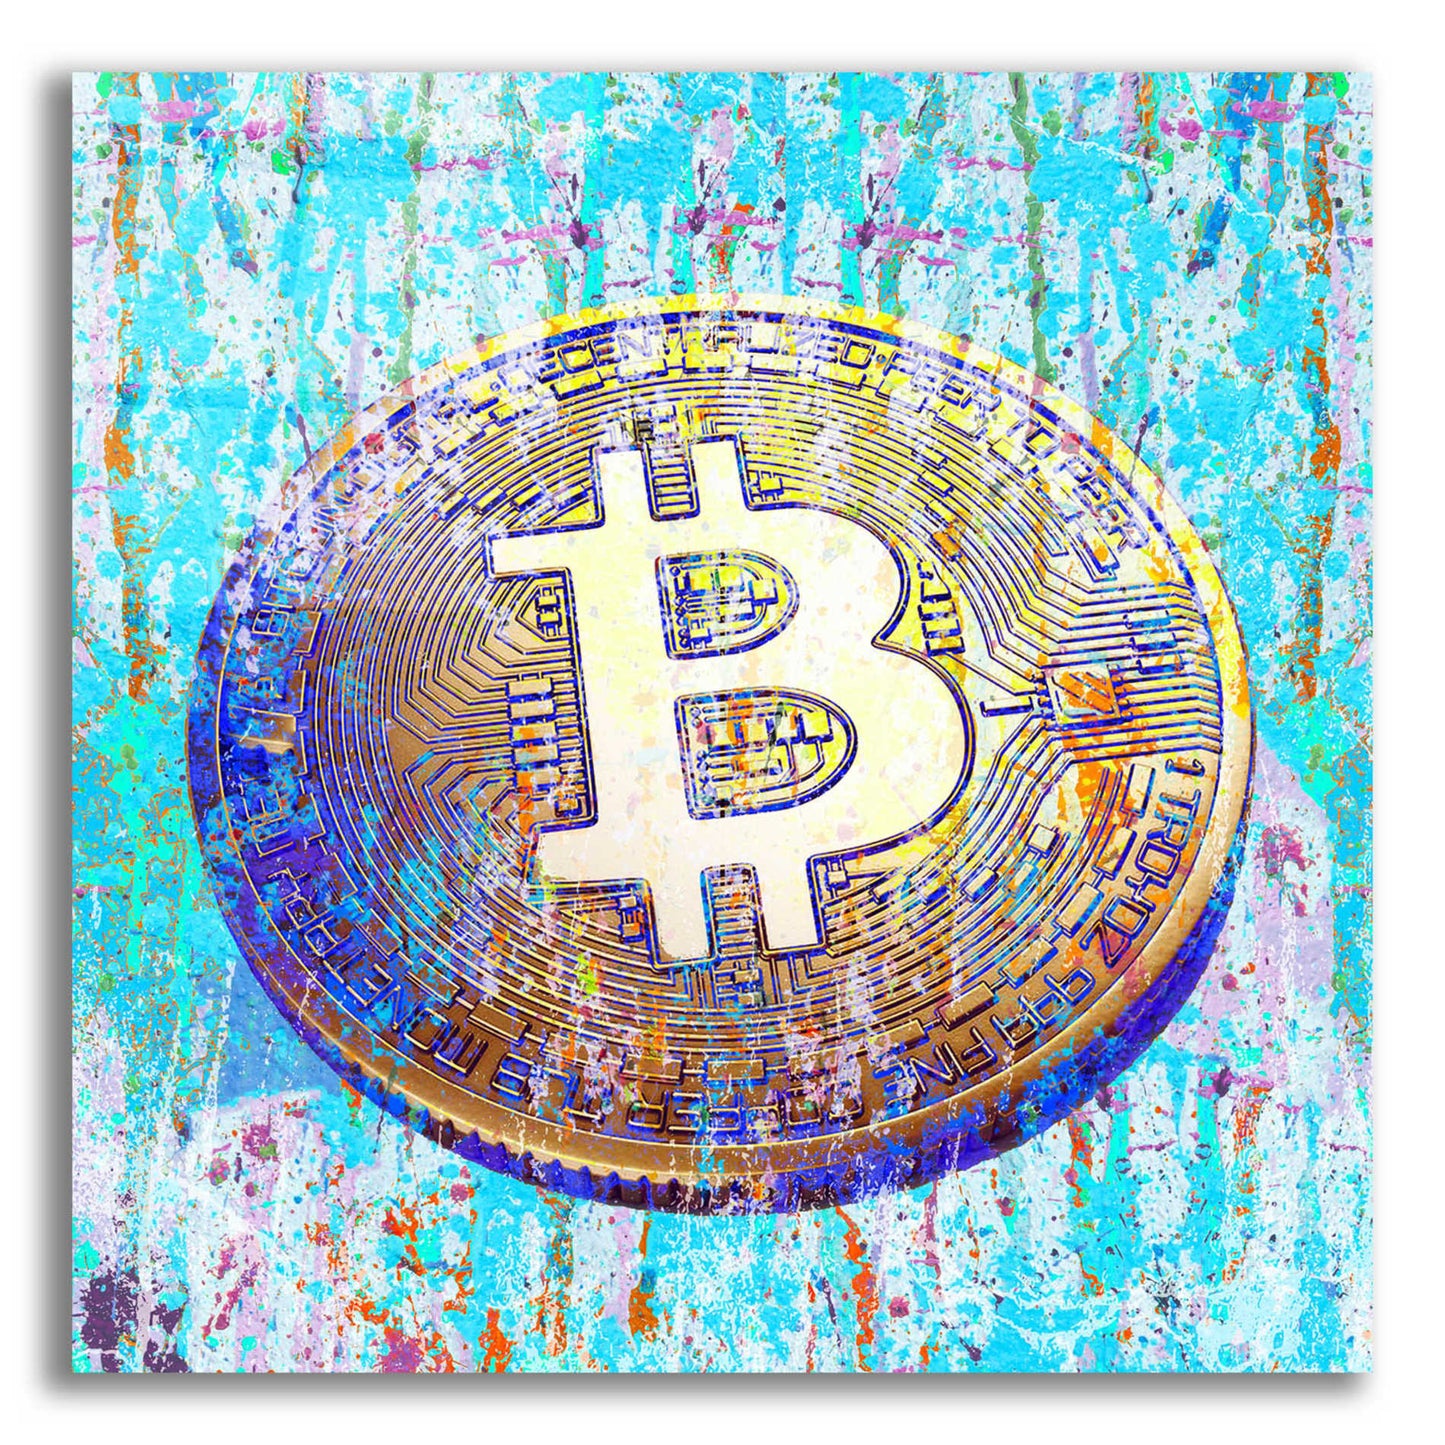 Epic Art 'The Inextinguishable Bitcoin,' Acrylic Wall Art,12x12x1.1x0,18x18x1.1x0,26x26x1.74x0,37x37x1.74x0